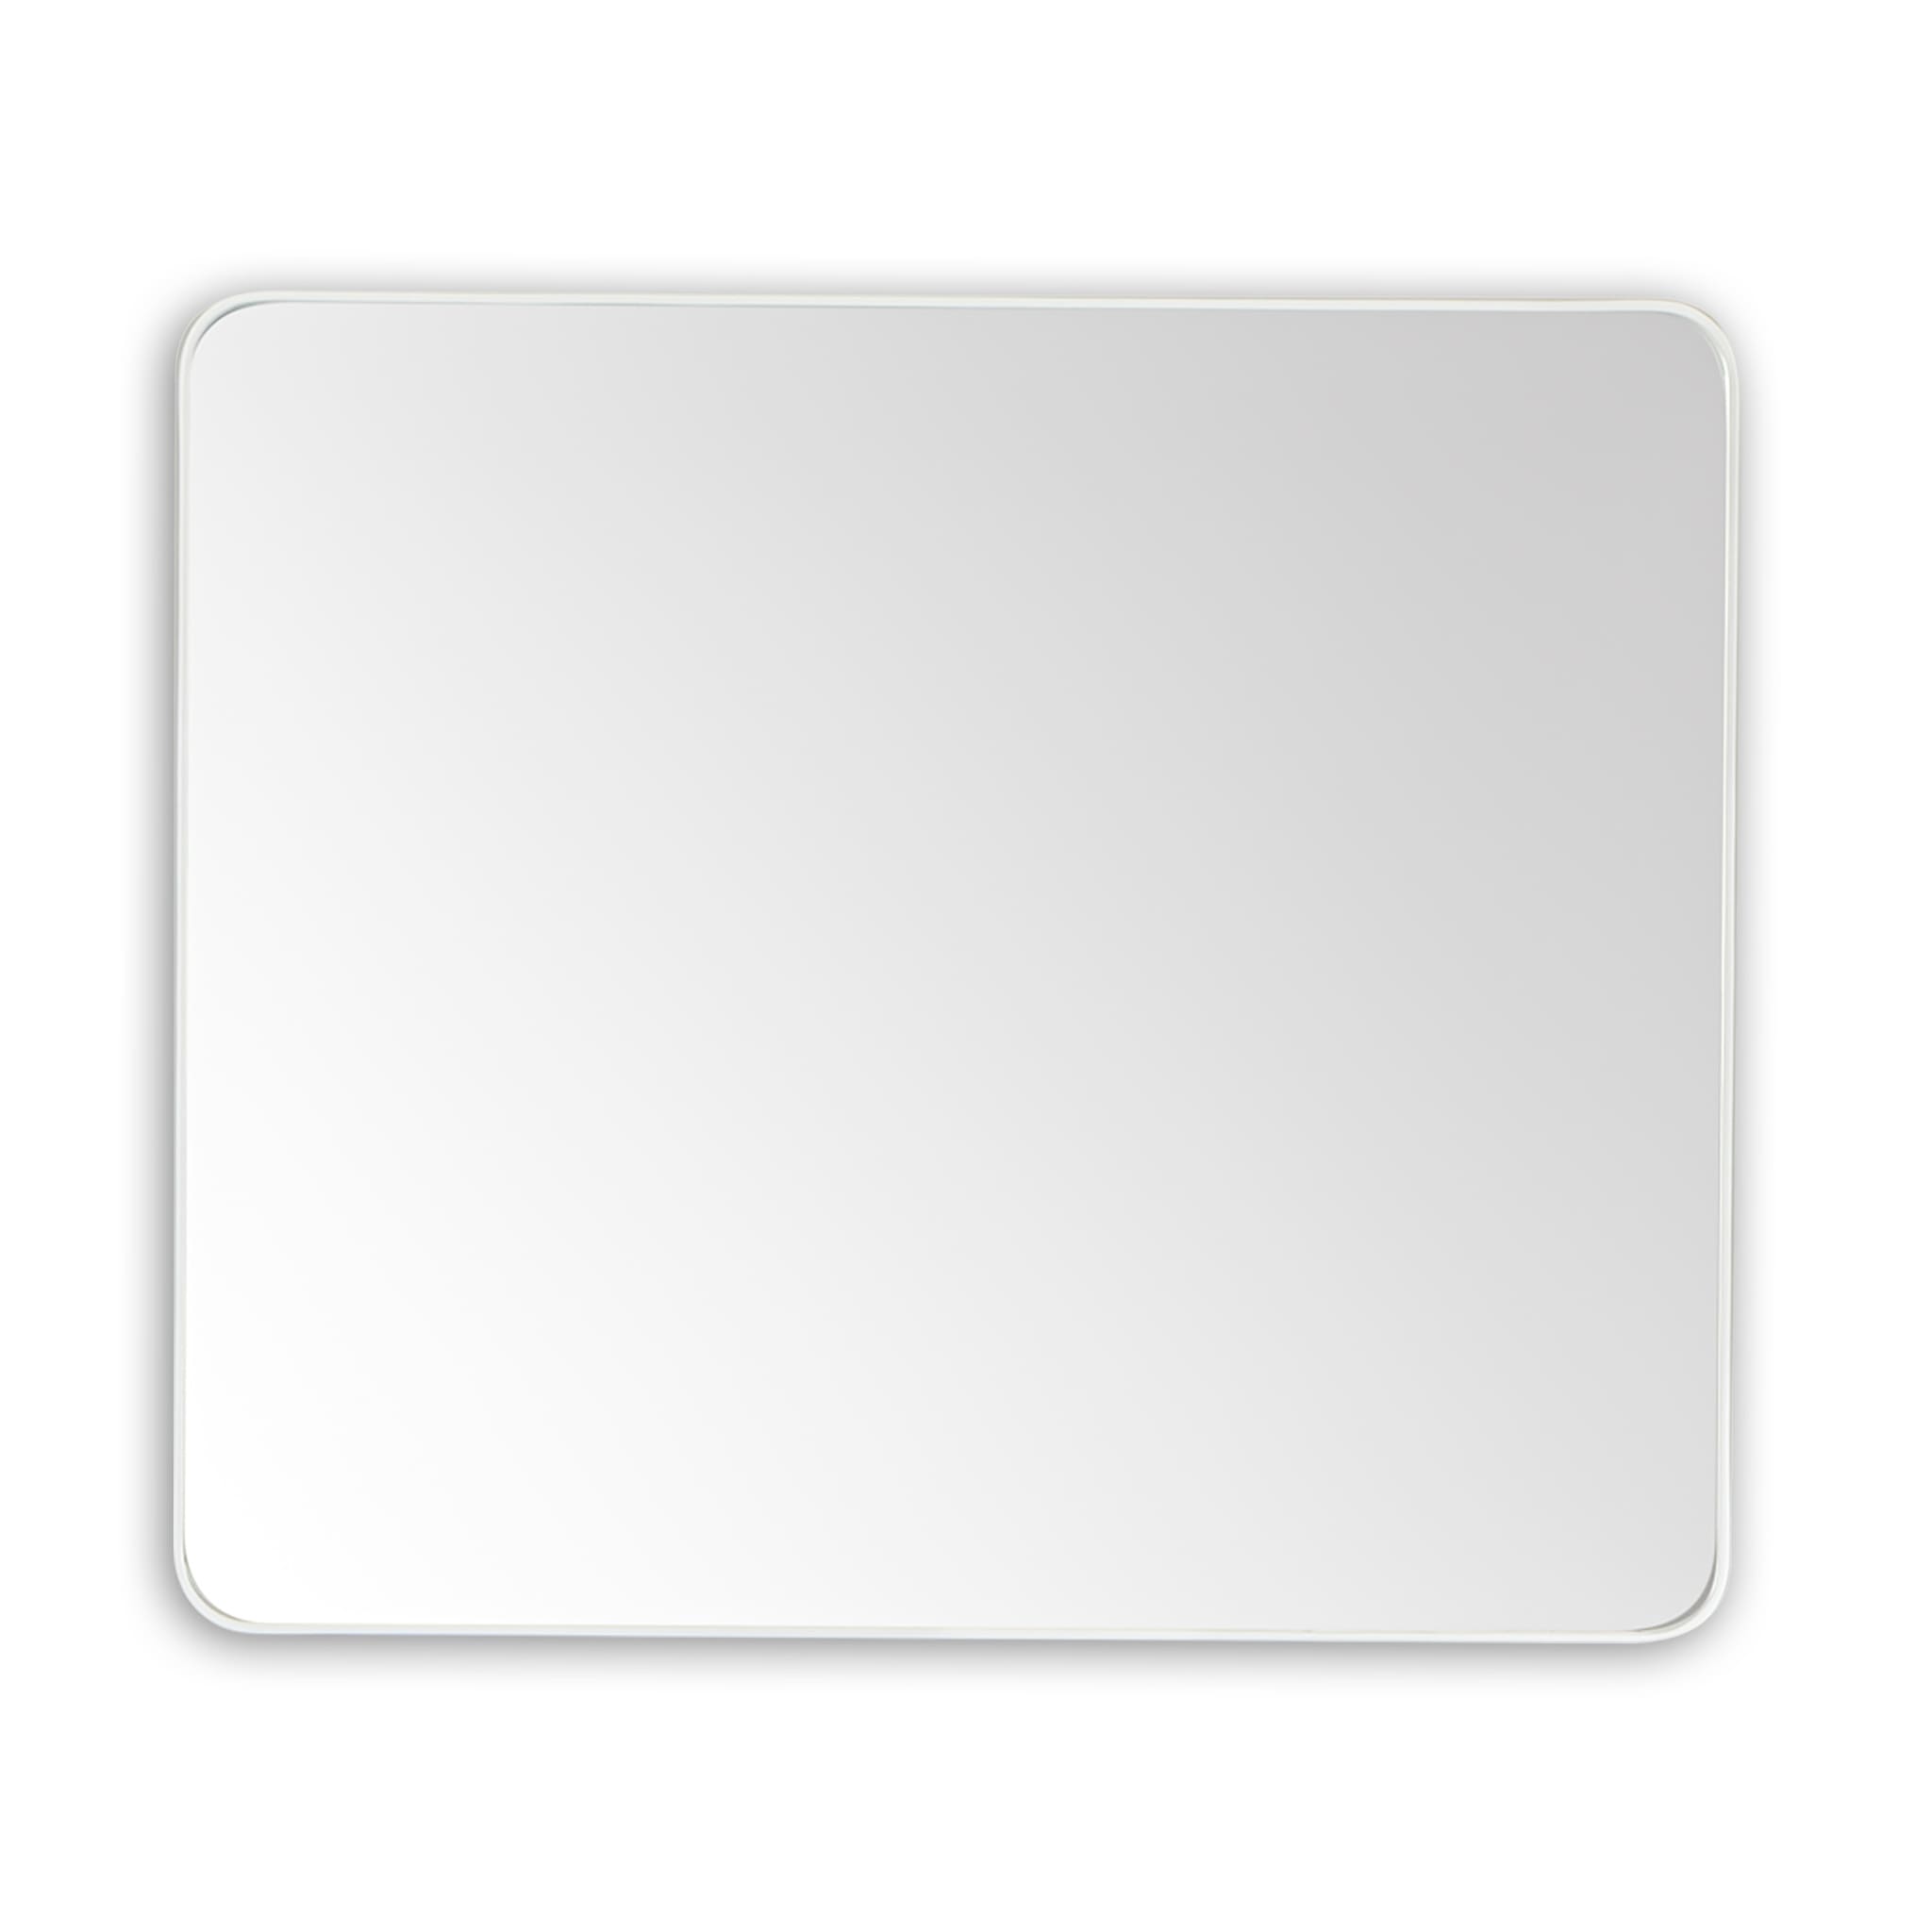  Bathroom Rectangular Mirror Homelero 30"  #size_30"  #color_white